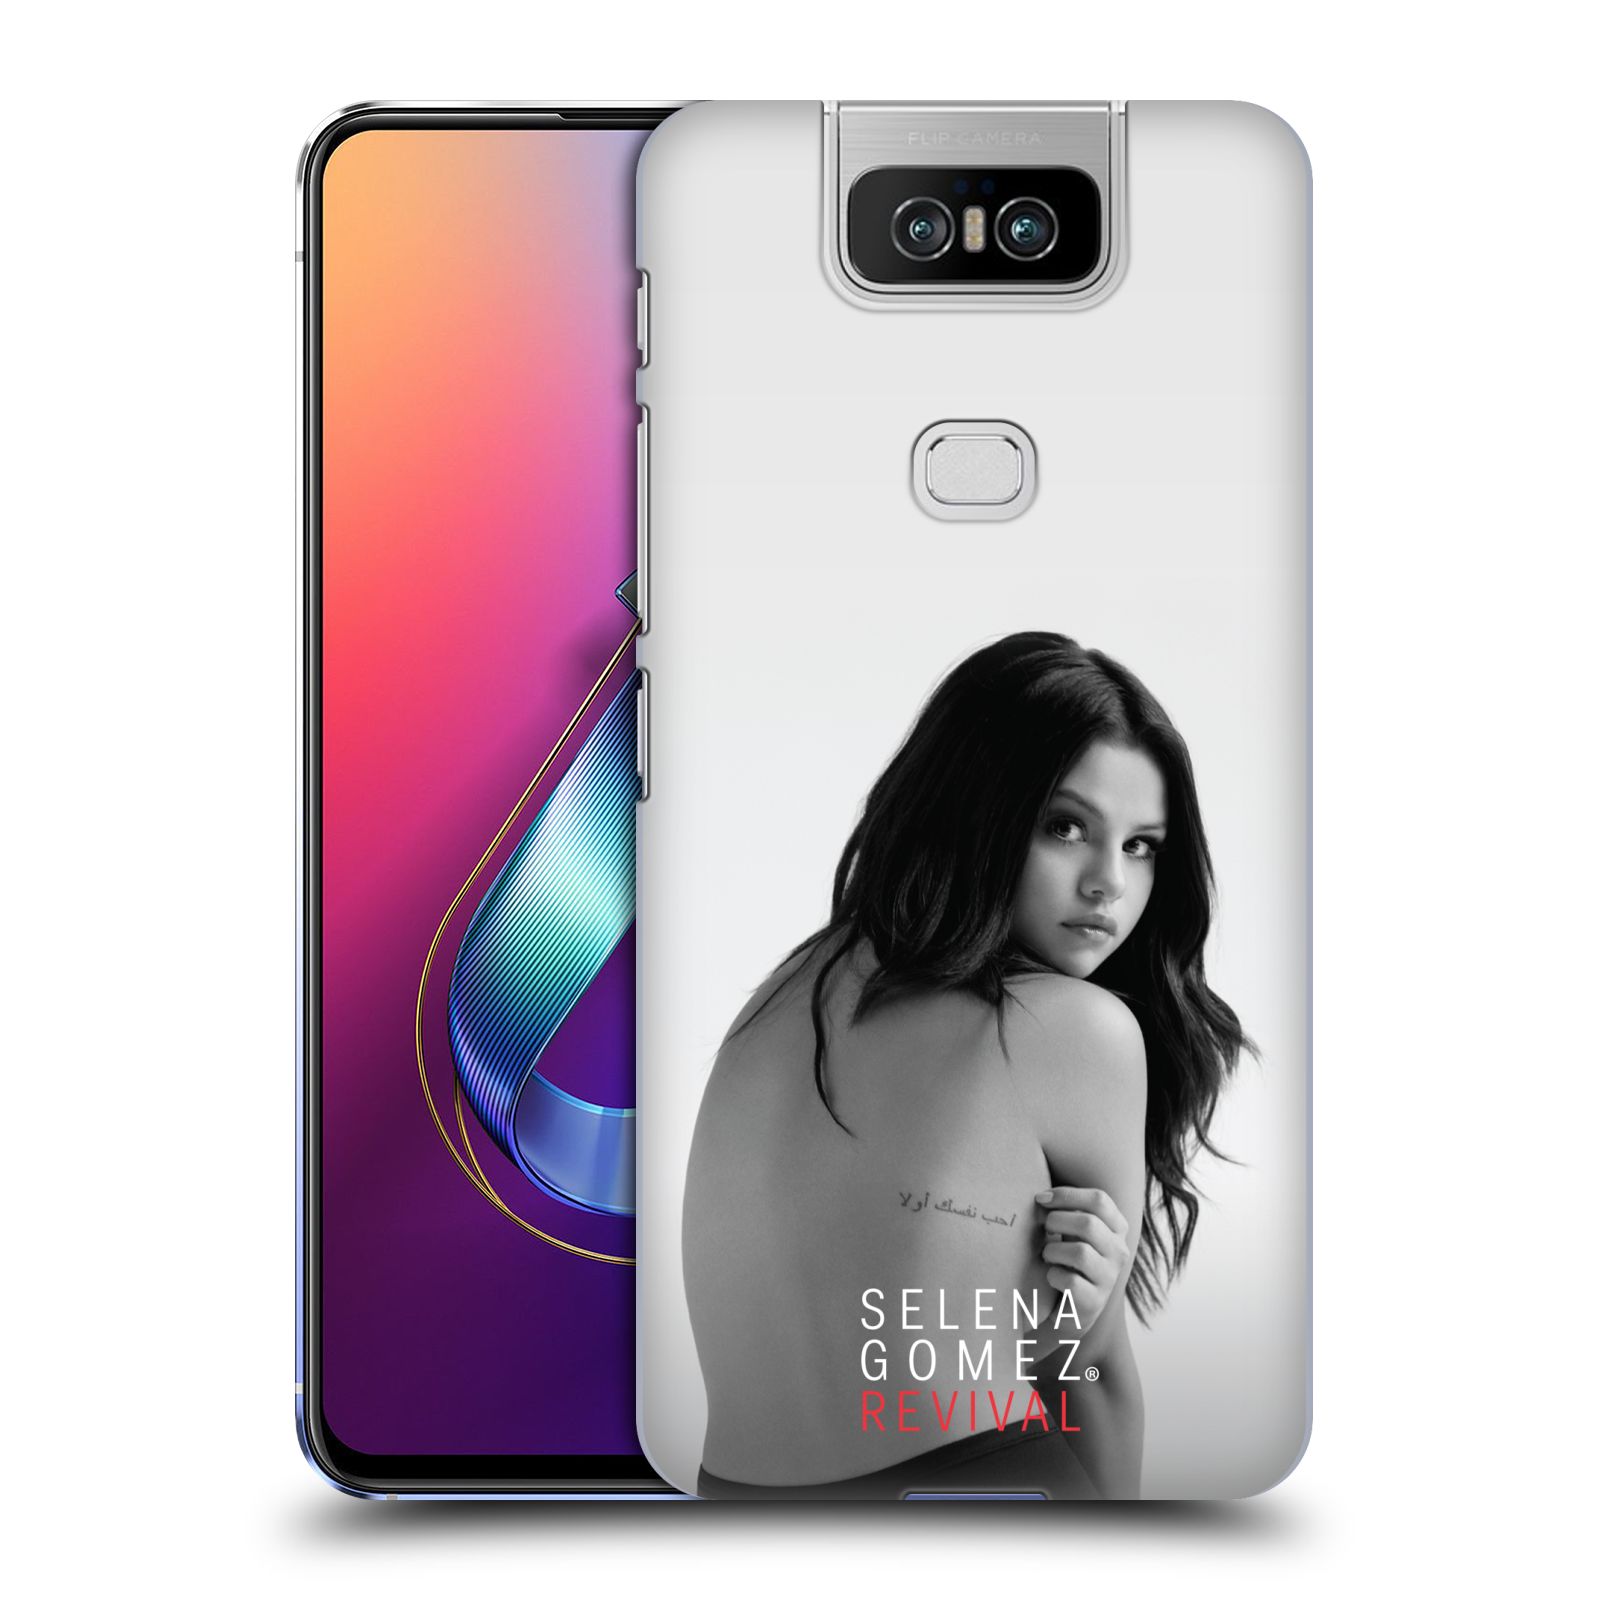 Pouzdro na mobil Asus Zenfone 6 ZS630KL - HEAD CASE - Zpěvačka Selena Gomez foto Revival zadní strana